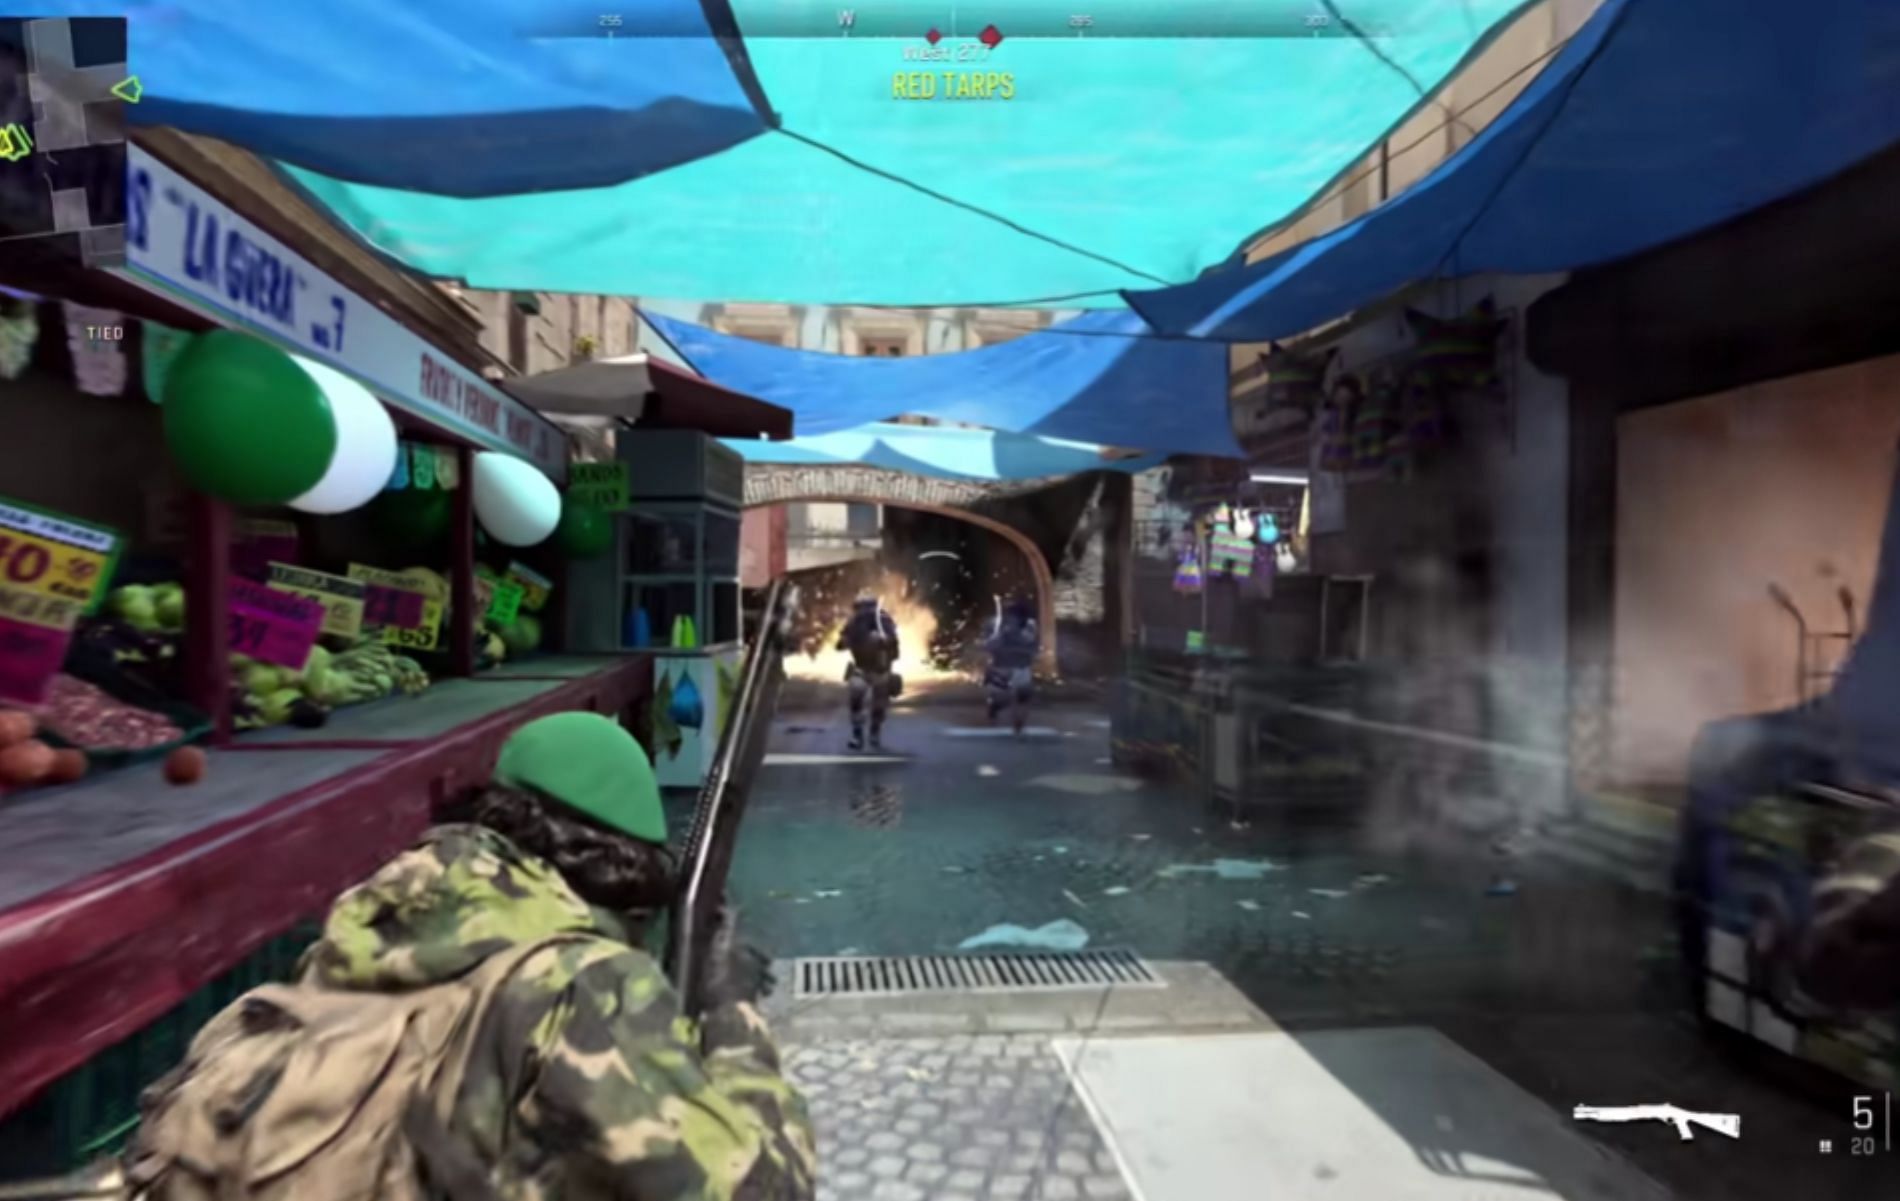 Call of Duty Warzone 2 Crossplay & Cross-Platform Breakdown